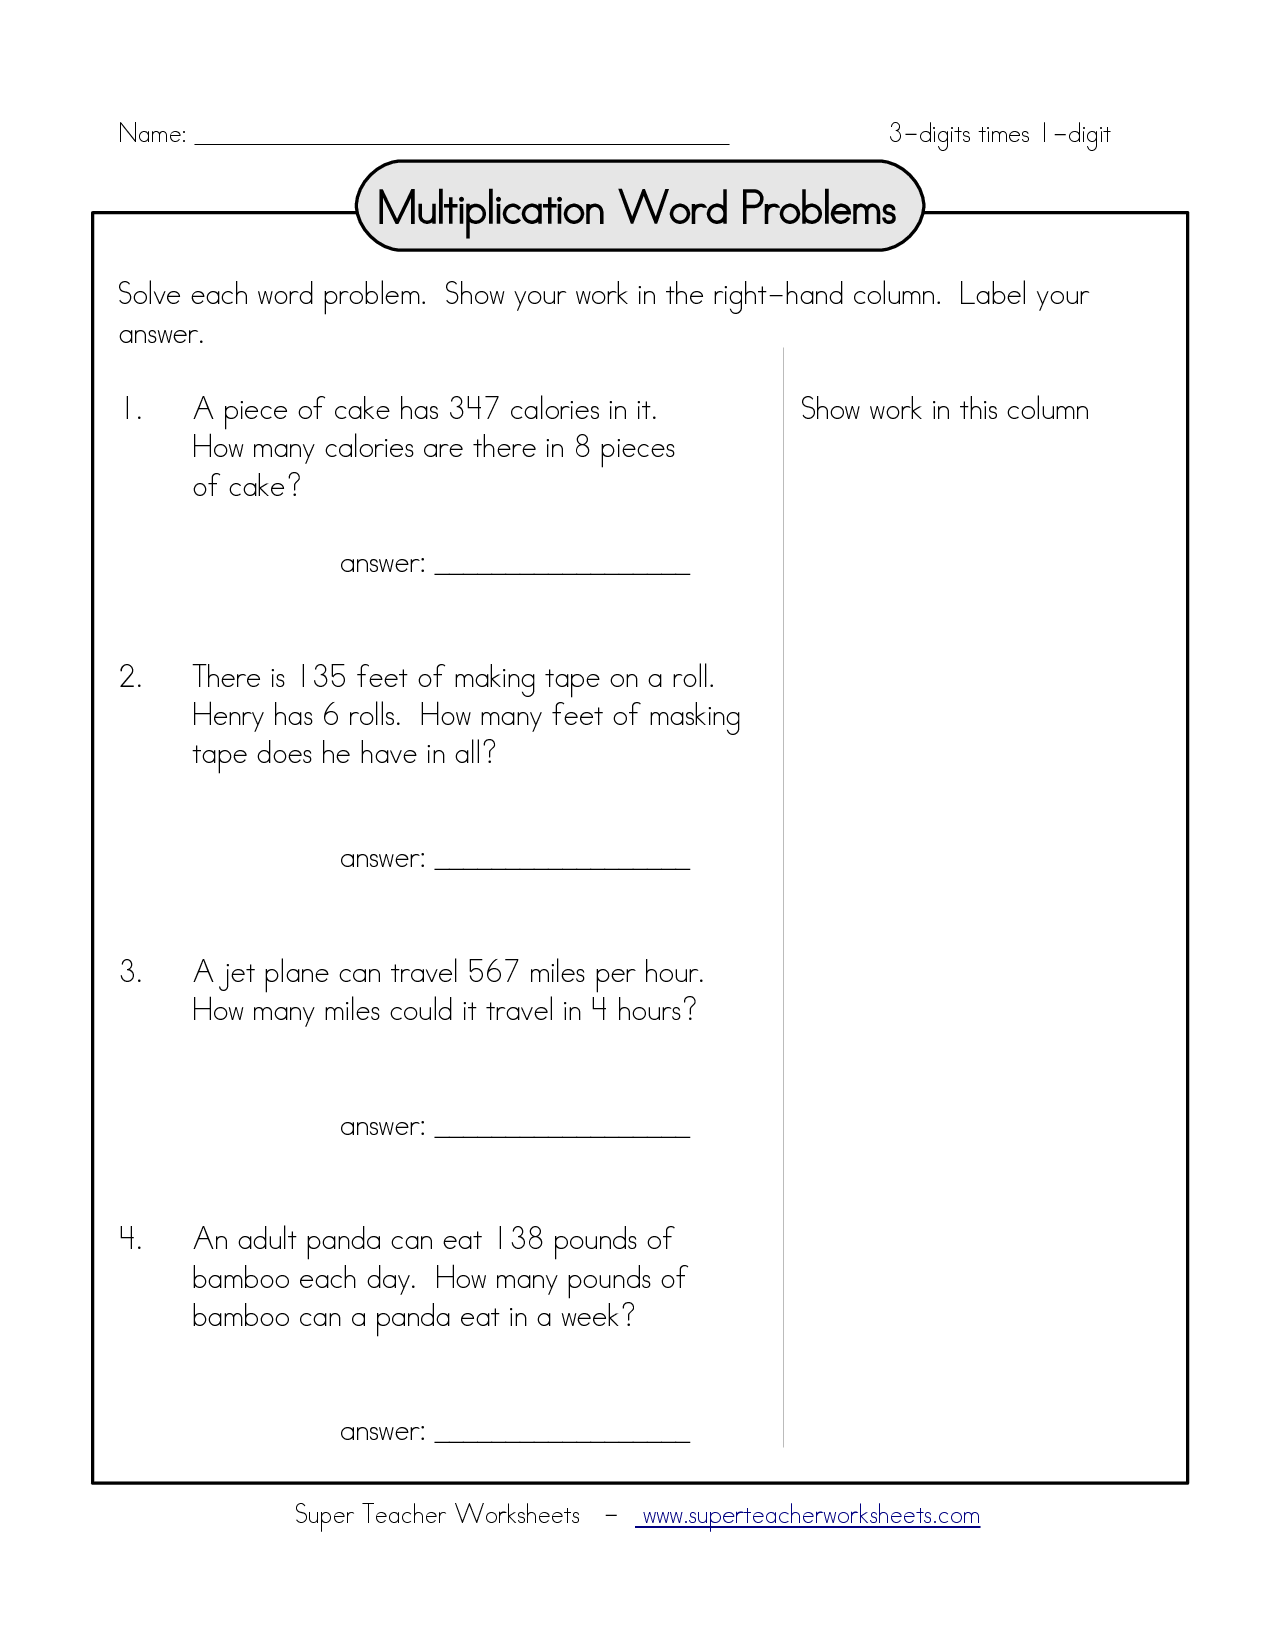 single-digit-multiplication-word-problems-worksheets-worksheetscity